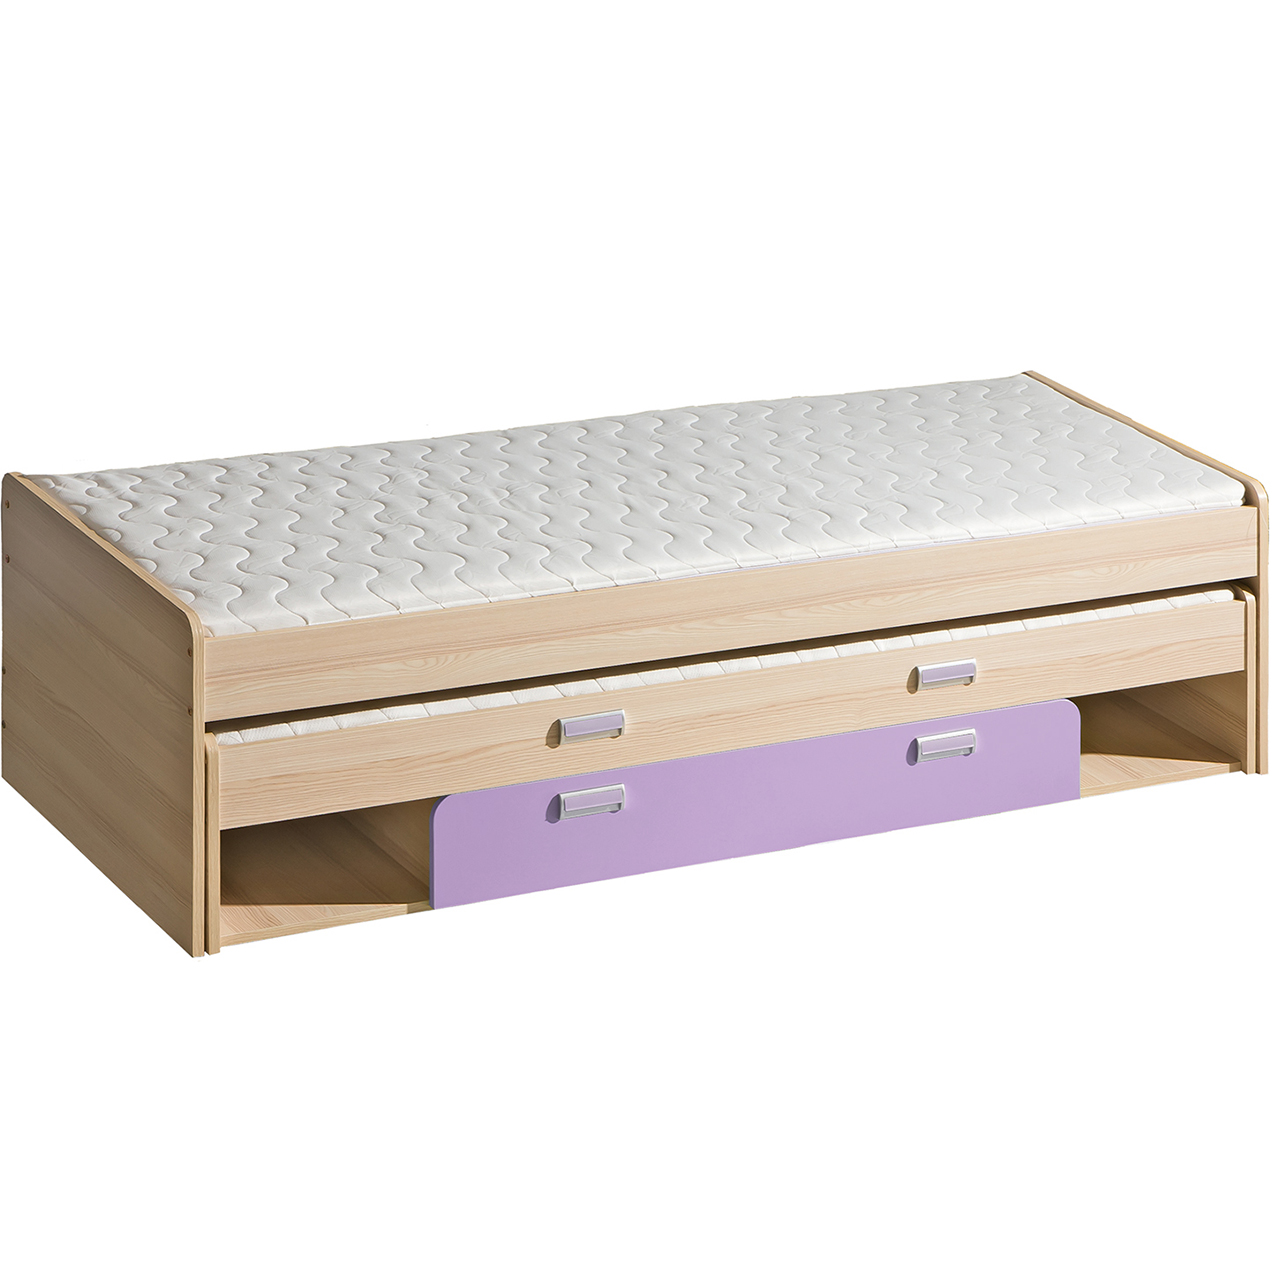 Bunk bed with storage LOREN LR16 ash / violet